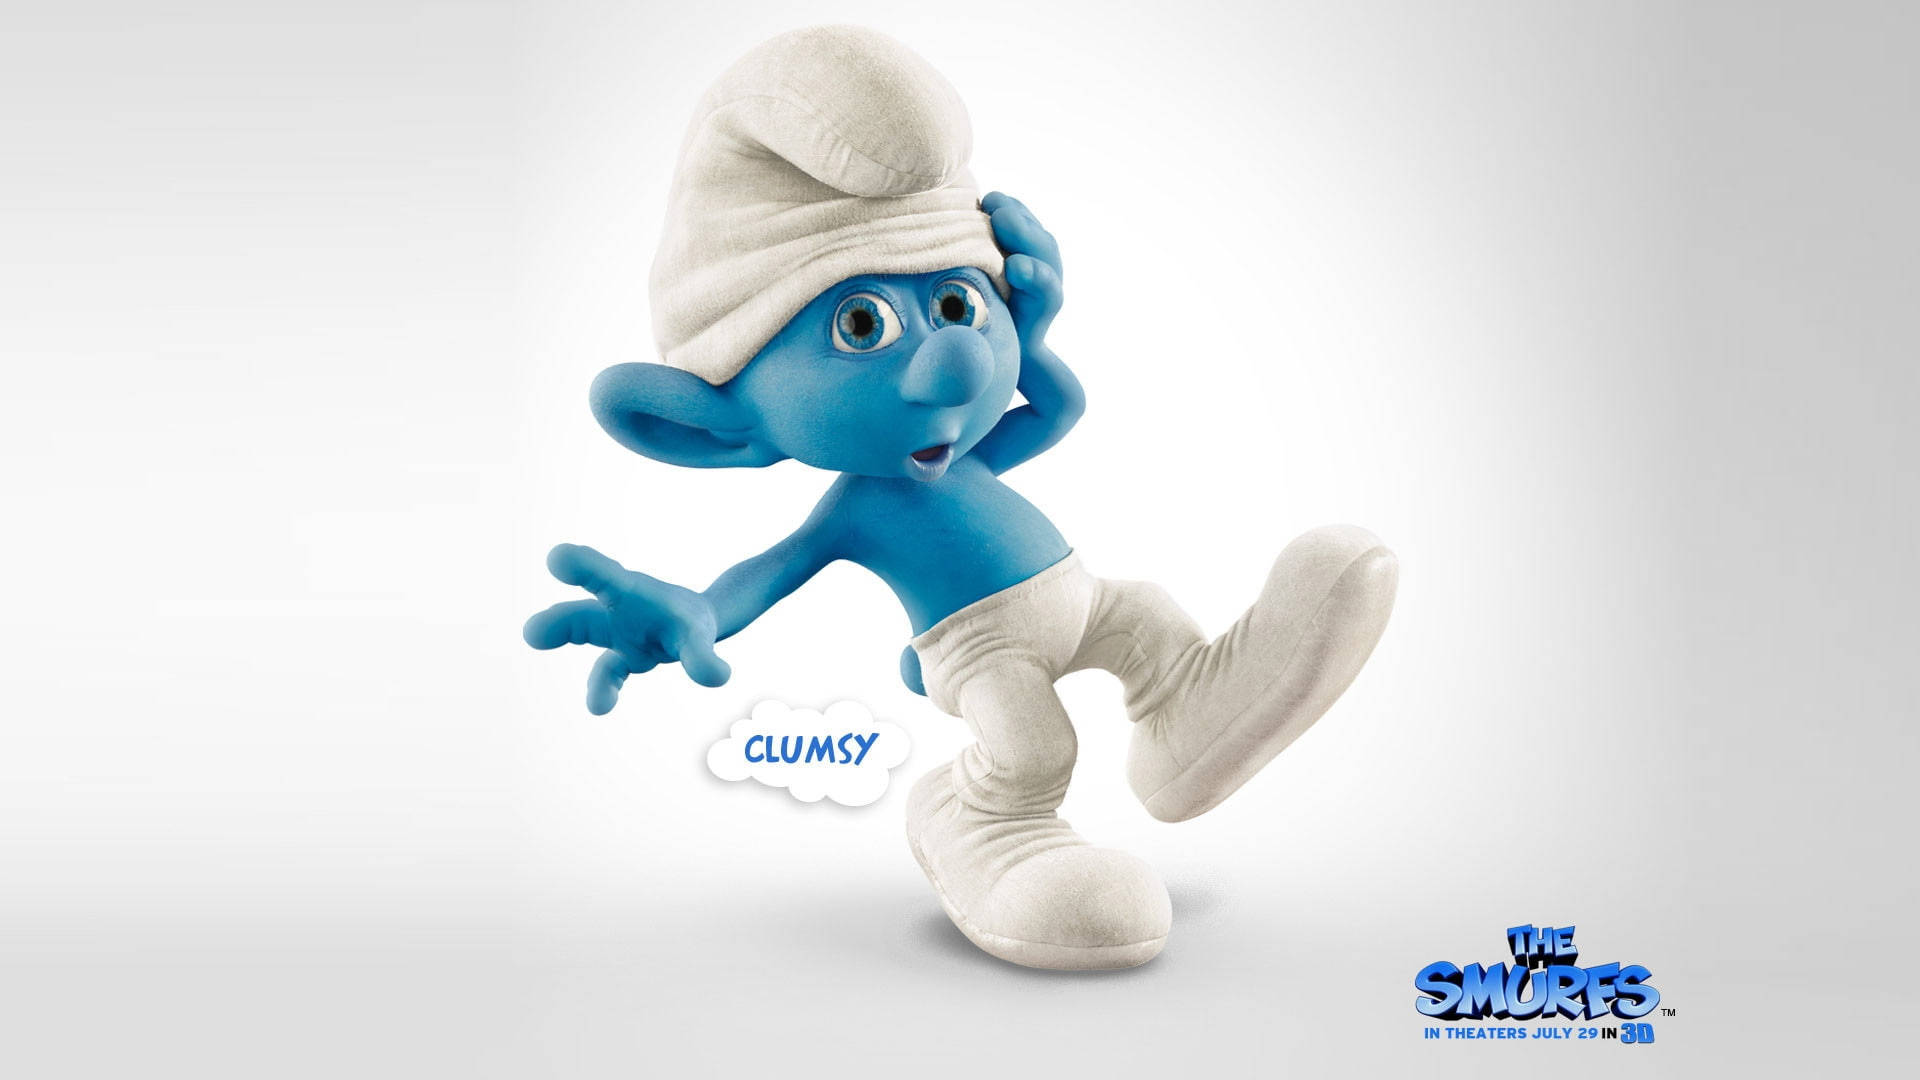 The Smurfs Clumsy Smurf